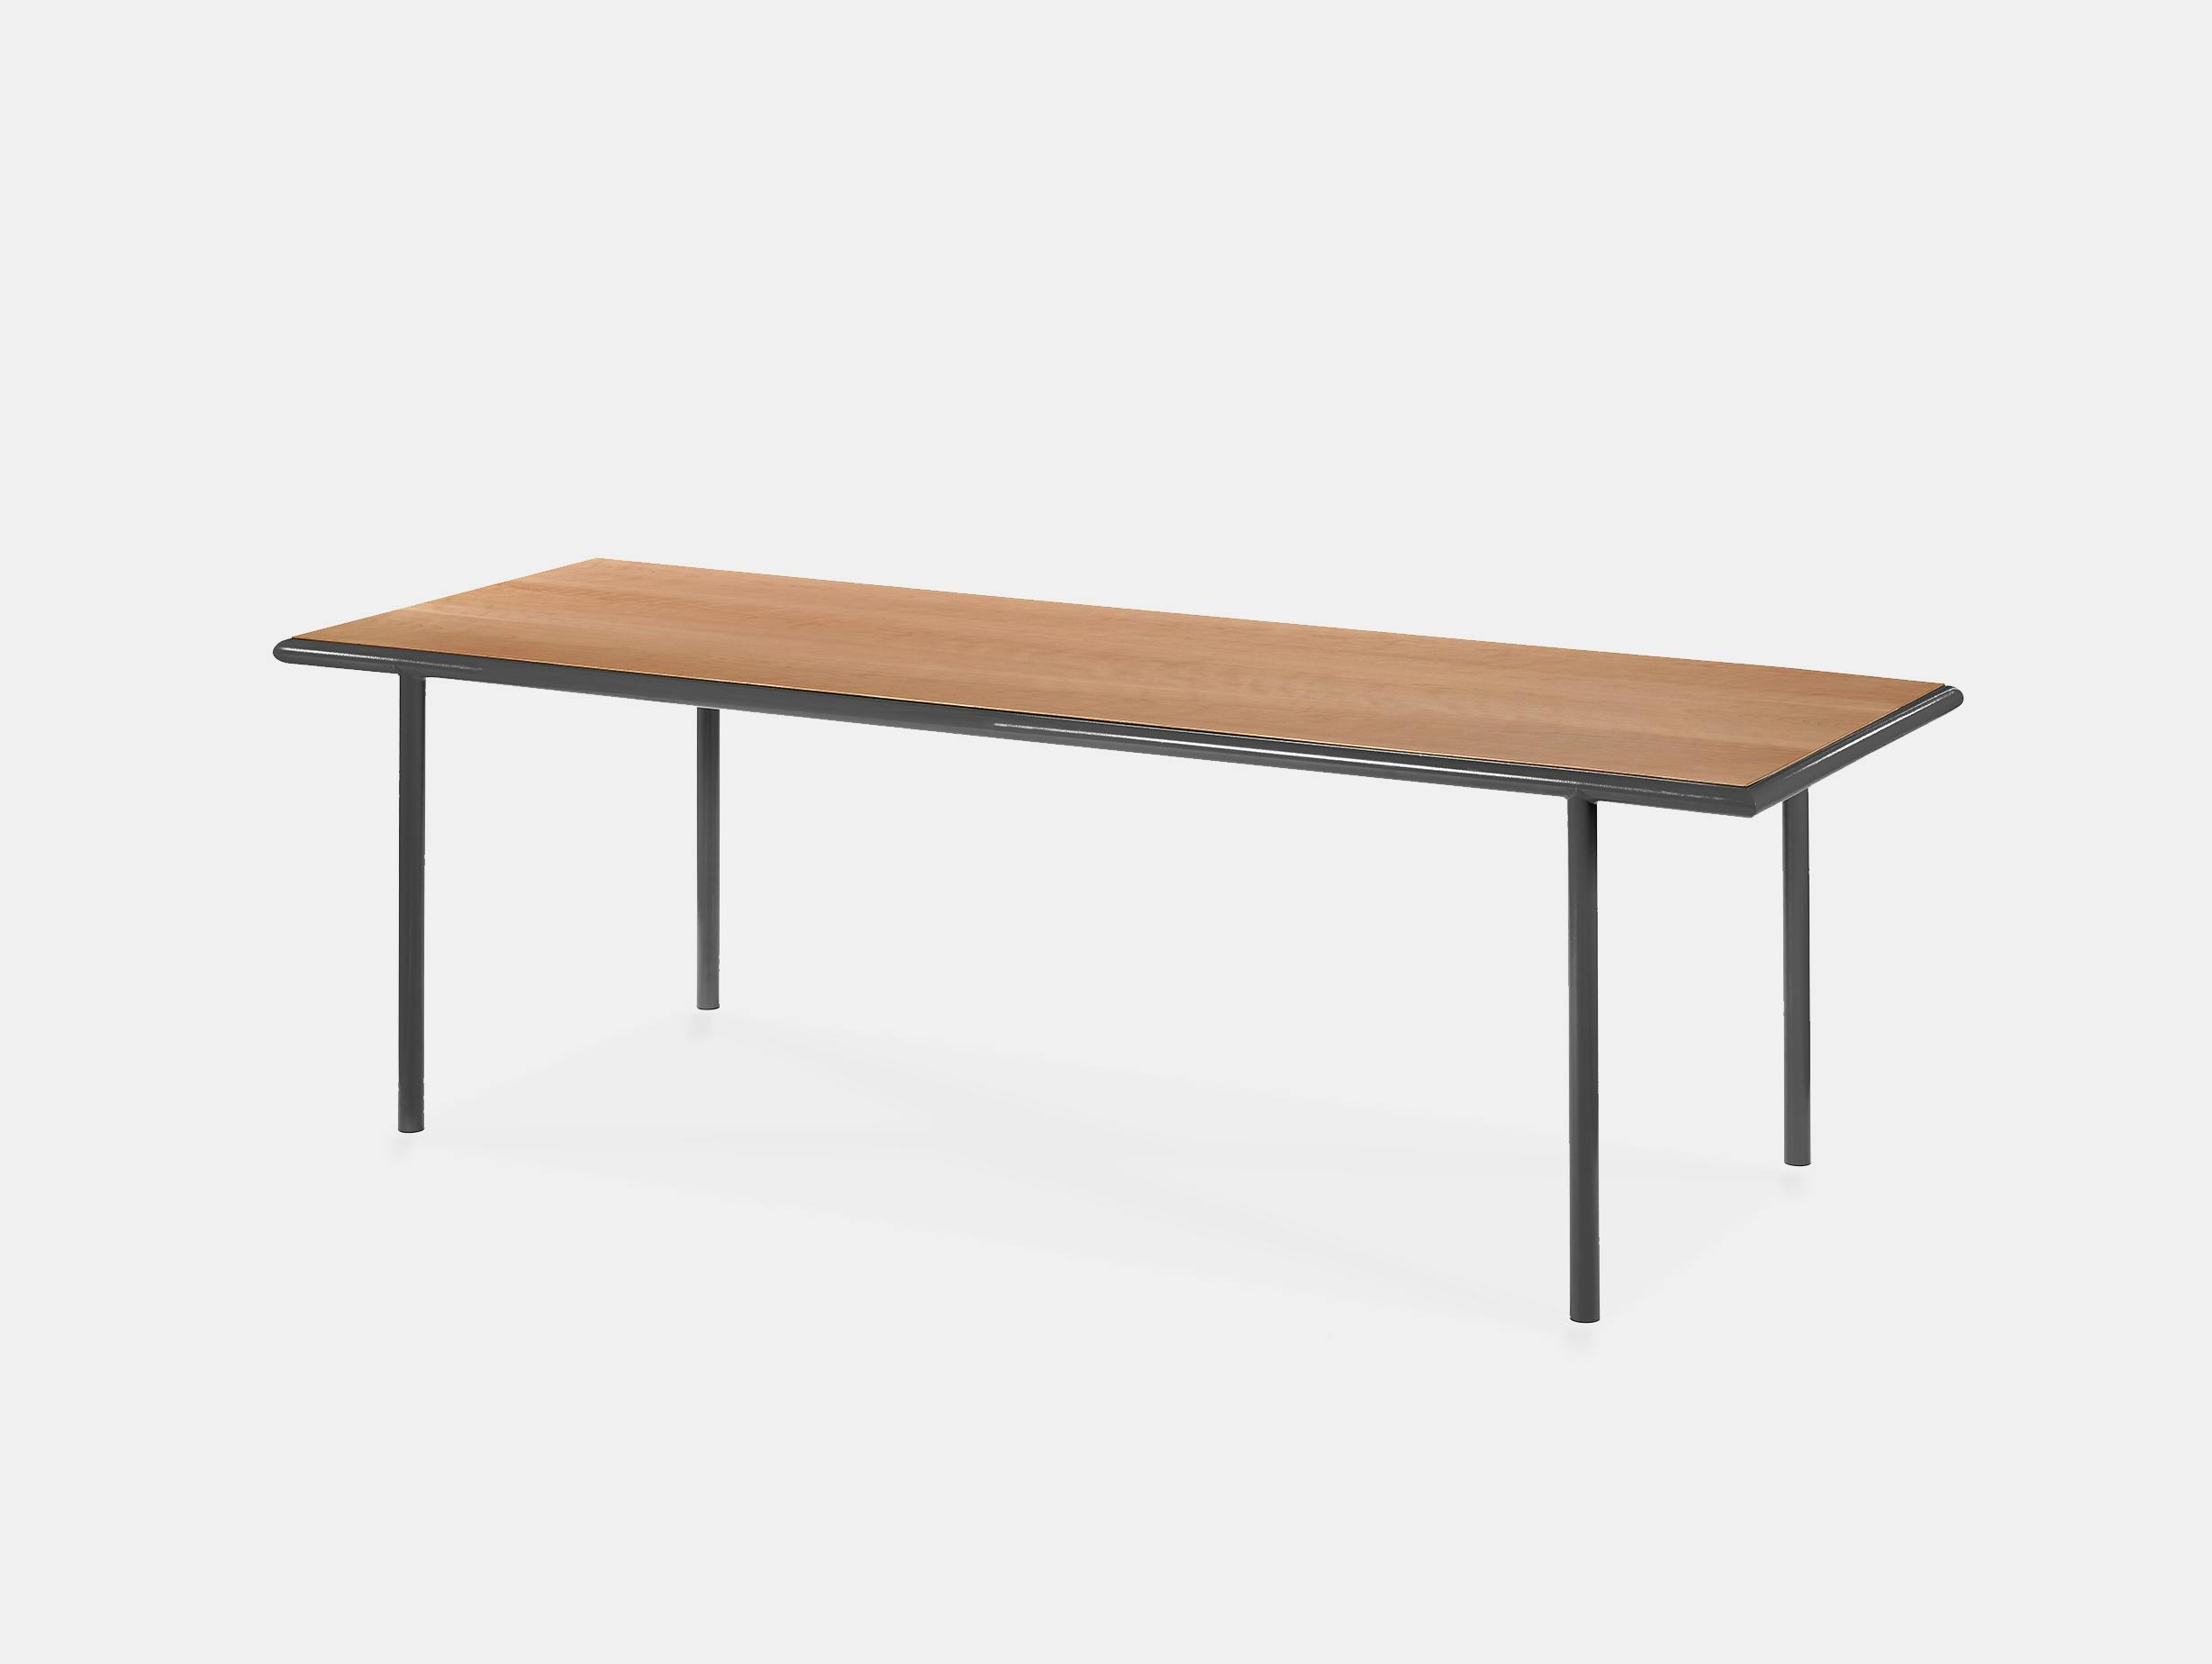 Muller van severen wooden table rectangular black cherry